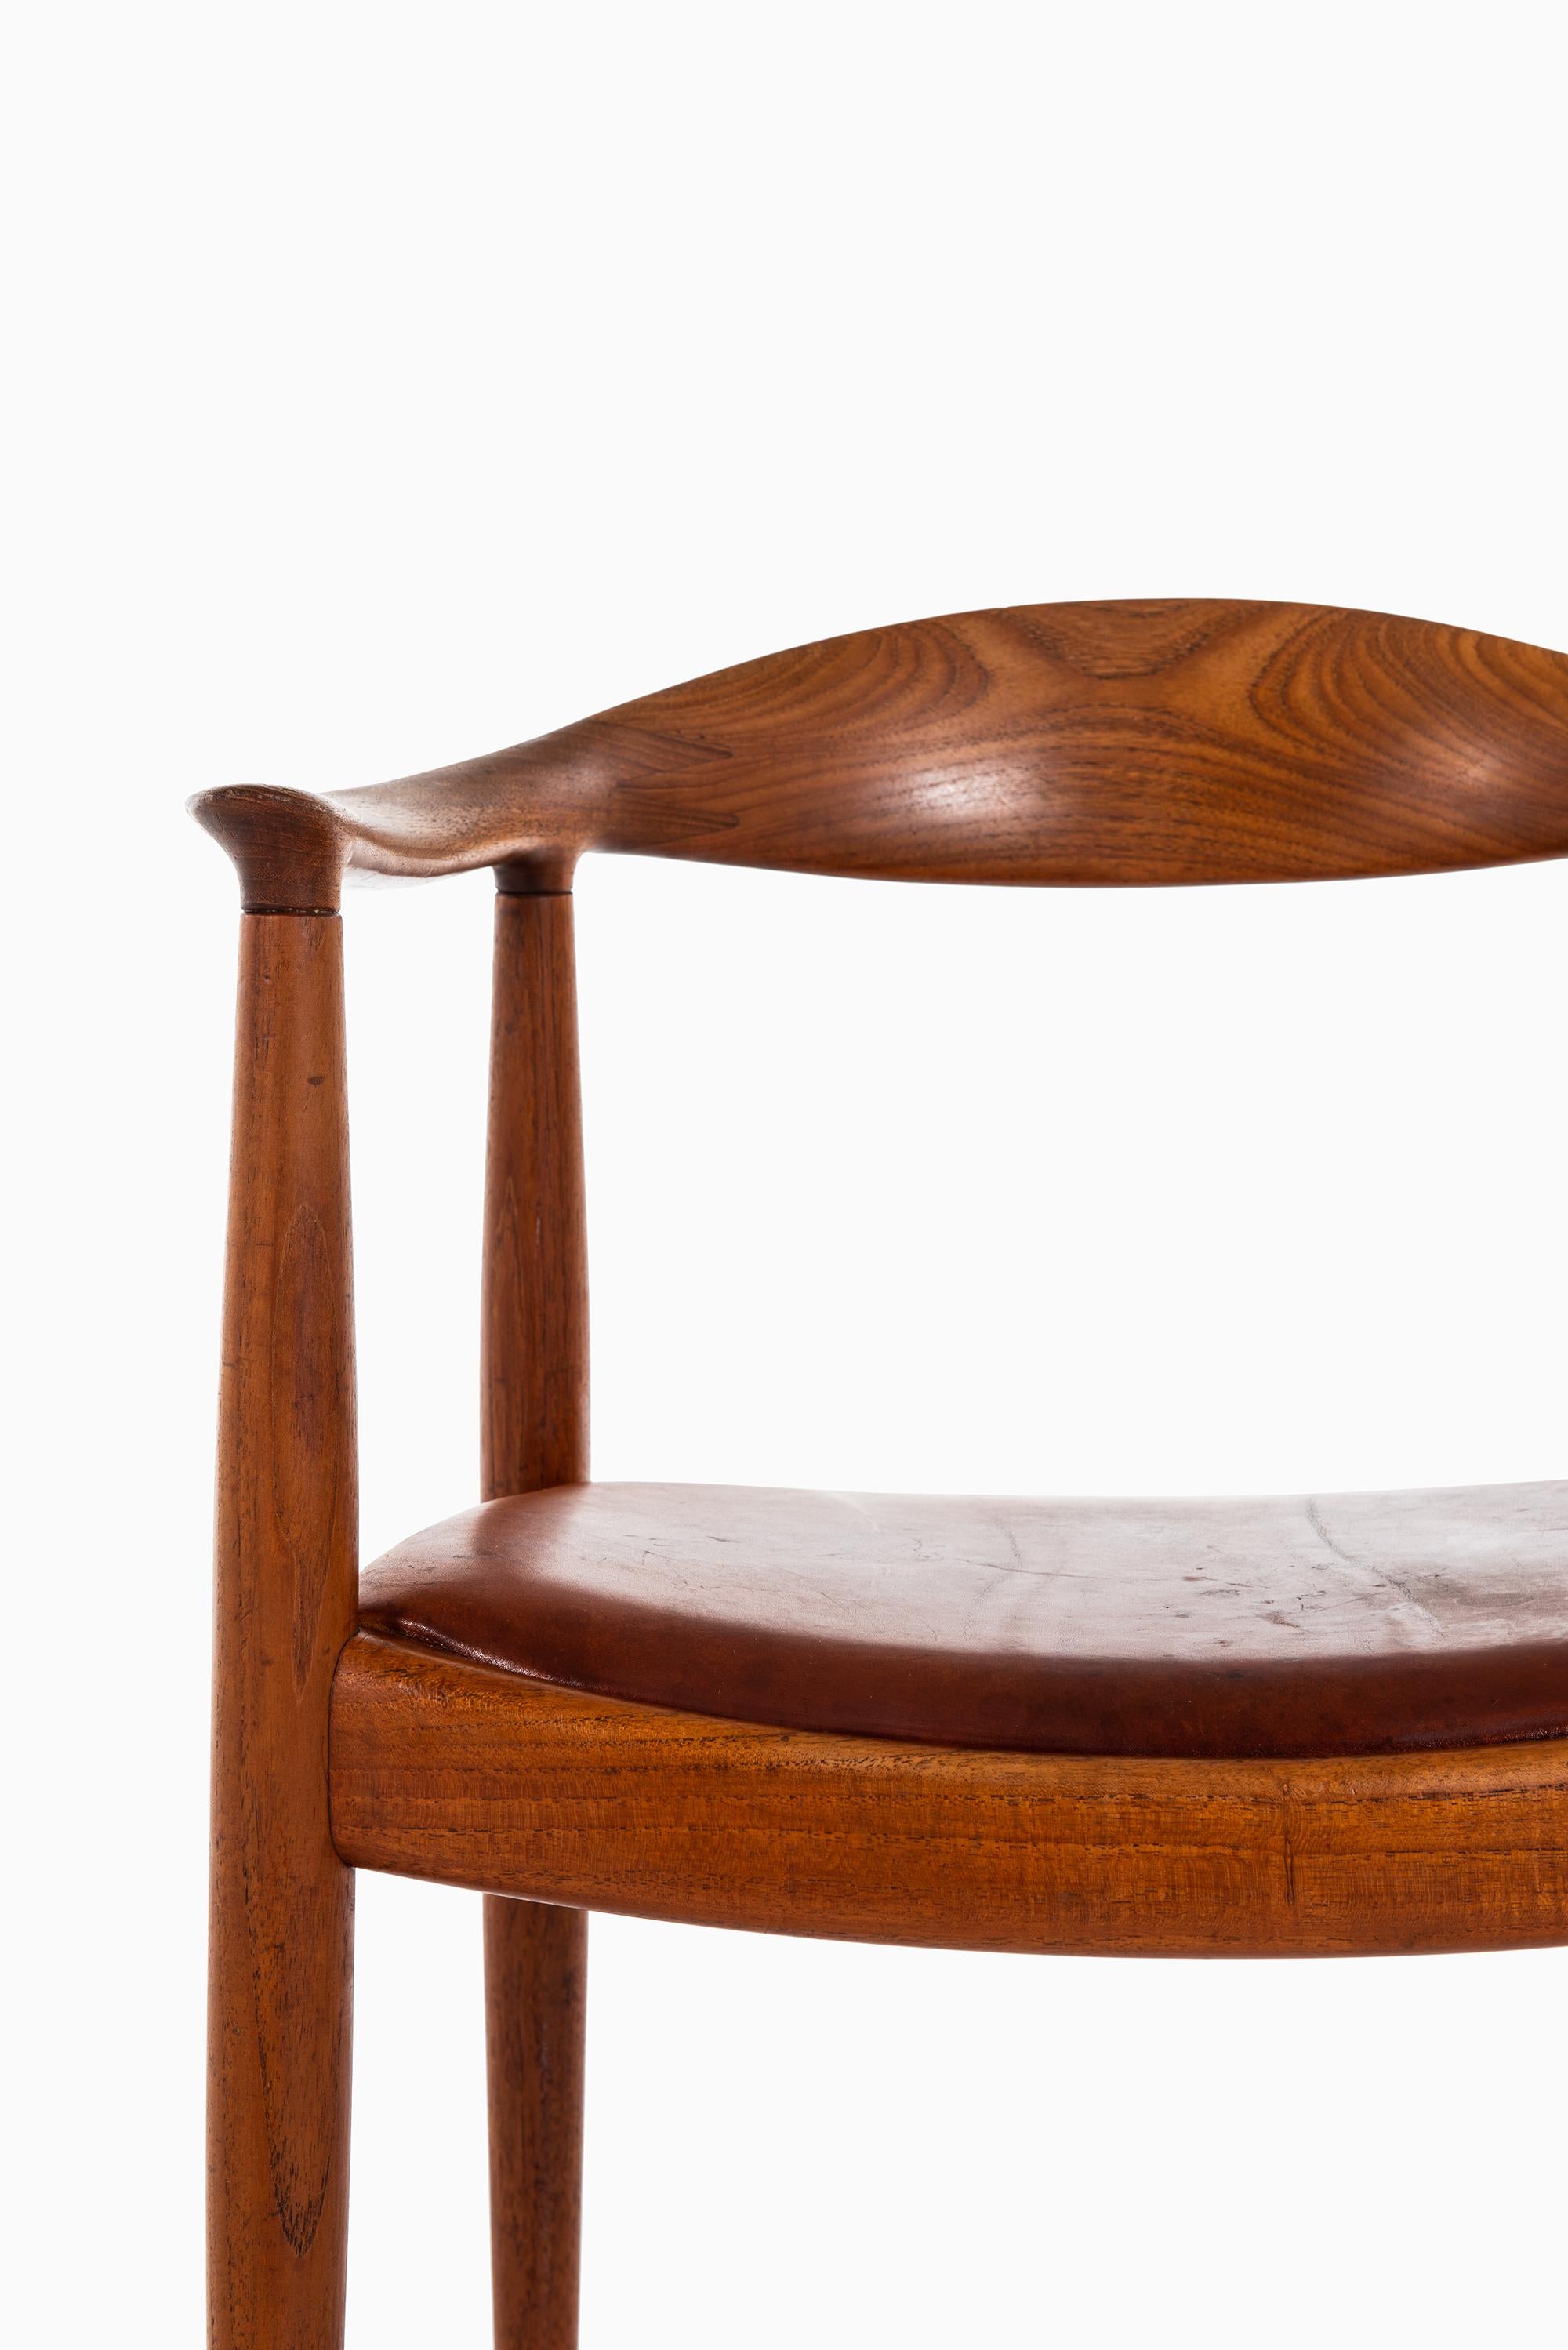 Rare armchair model JH-501 / the chair designed by Hans Wegner. Produced by Johannes Hansen in Denmark.